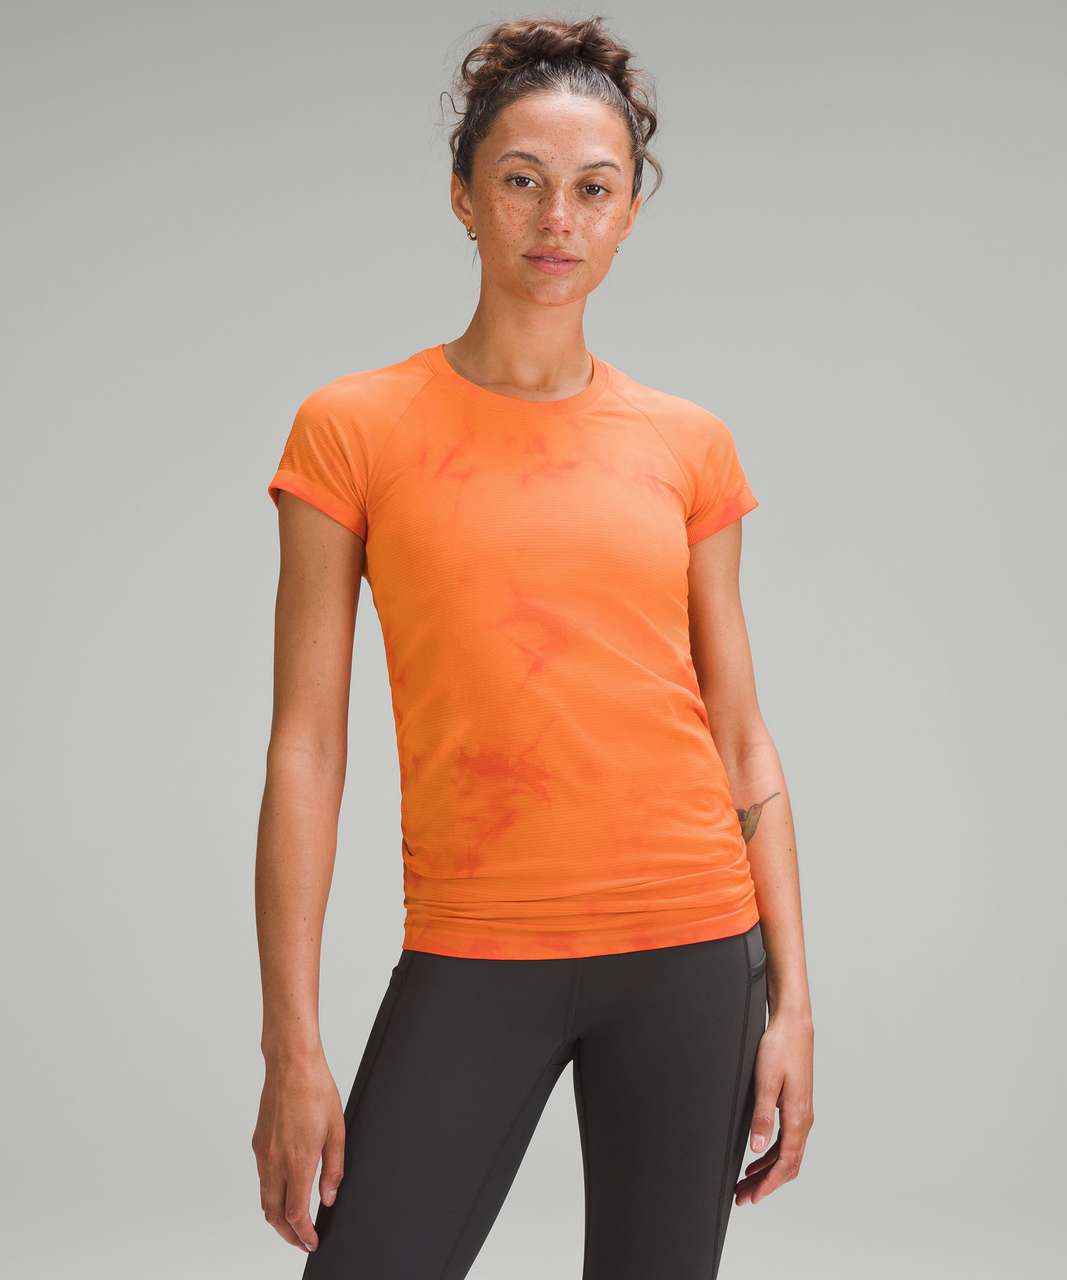 Lululemon Swiftly Tech Short-Sleeve Shirt 2.0 - Marble Dye Solar Orange